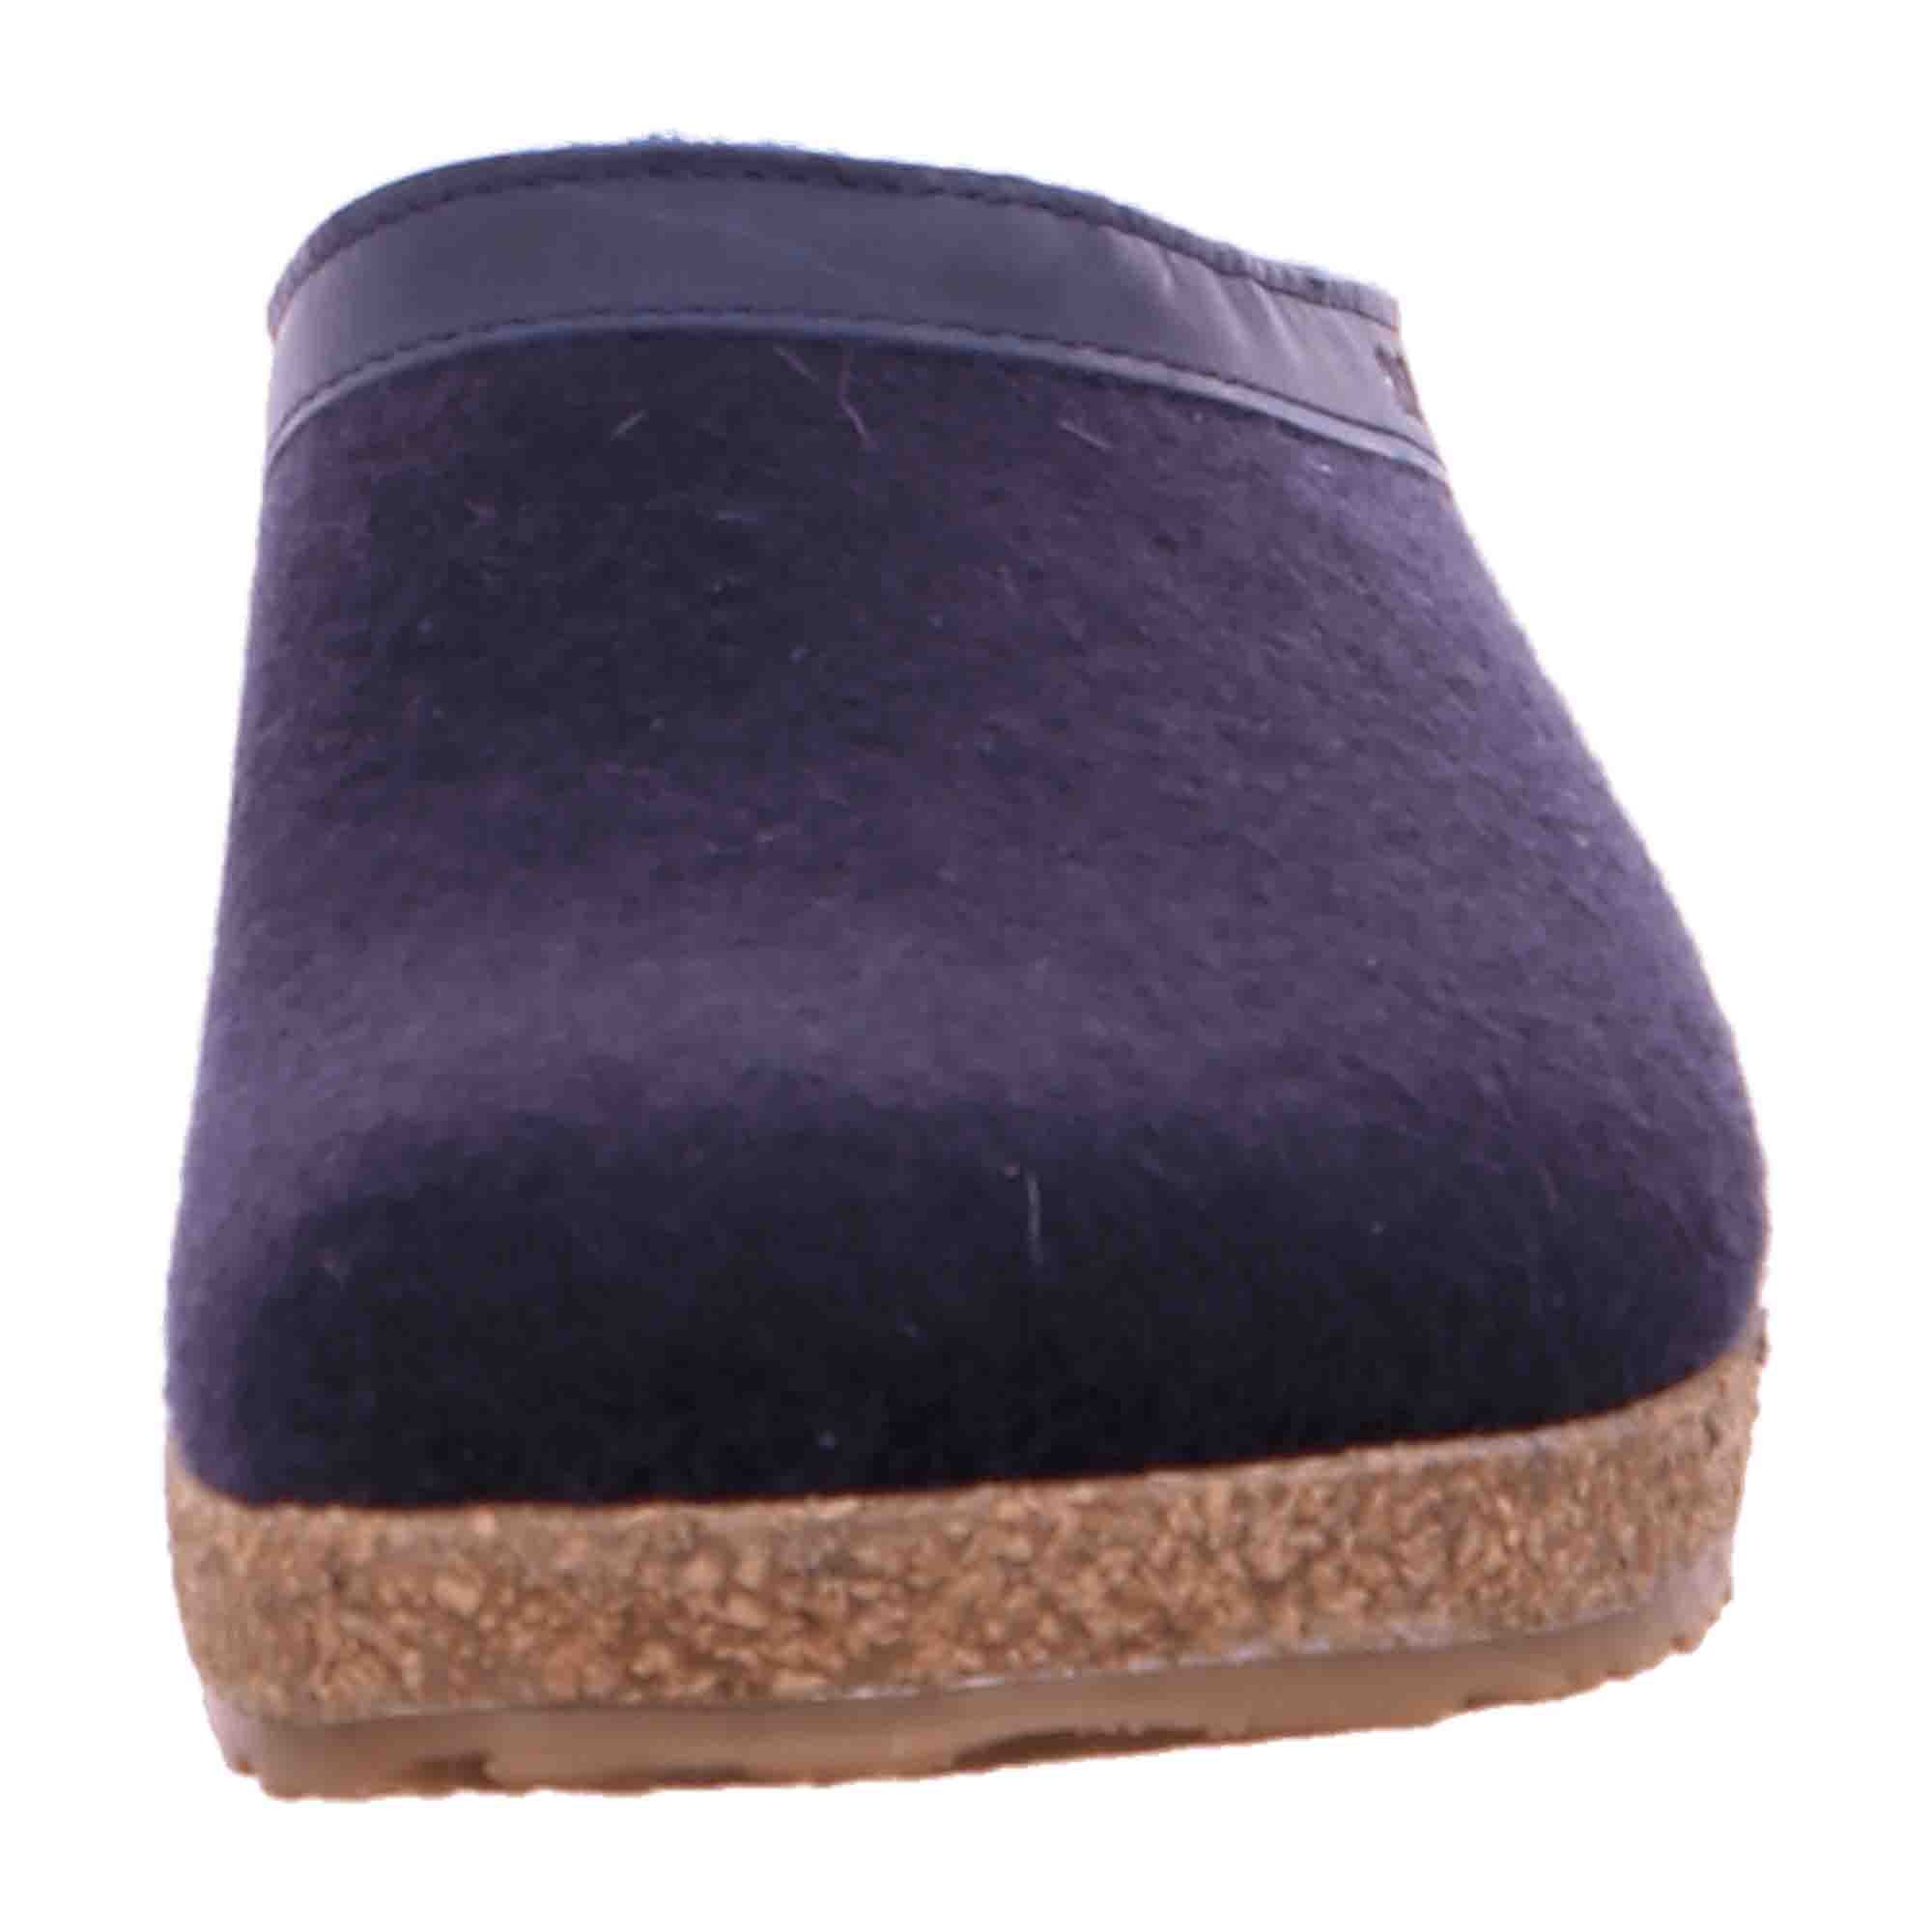 Haflinger Grizzly Torben Men's Clogs - Stylish & Durable Blue Wool Felt Footwear